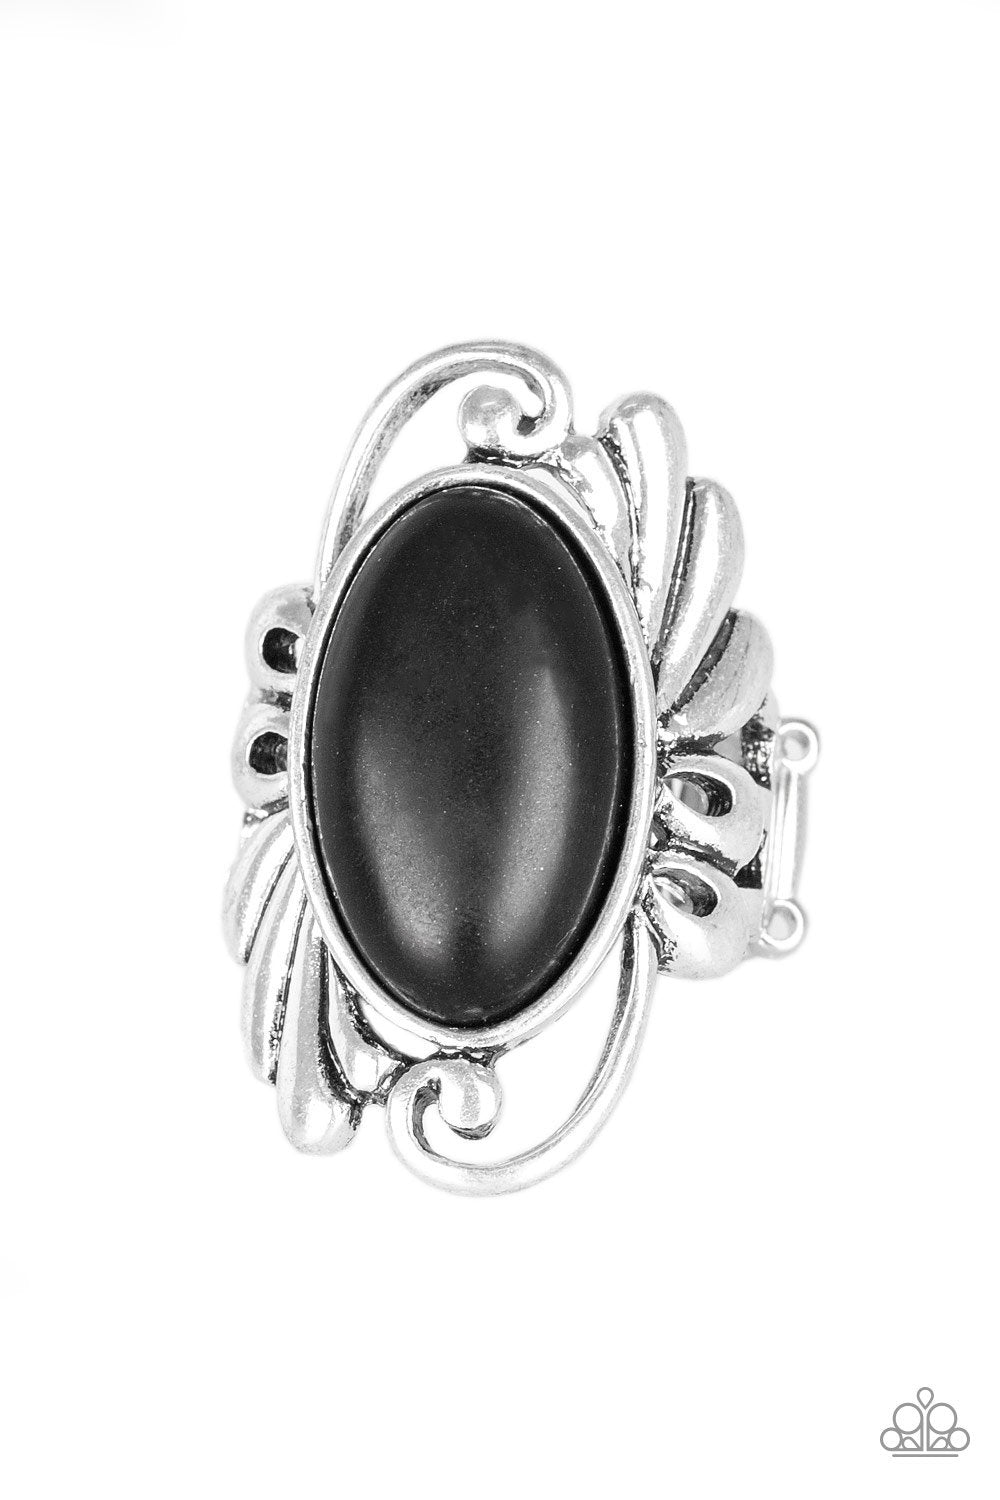 Sedona Sunset Black Stone Ring - Paparazzi Accessories- lightbox - CarasShop.com - $5 Jewelry by Cara Jewels